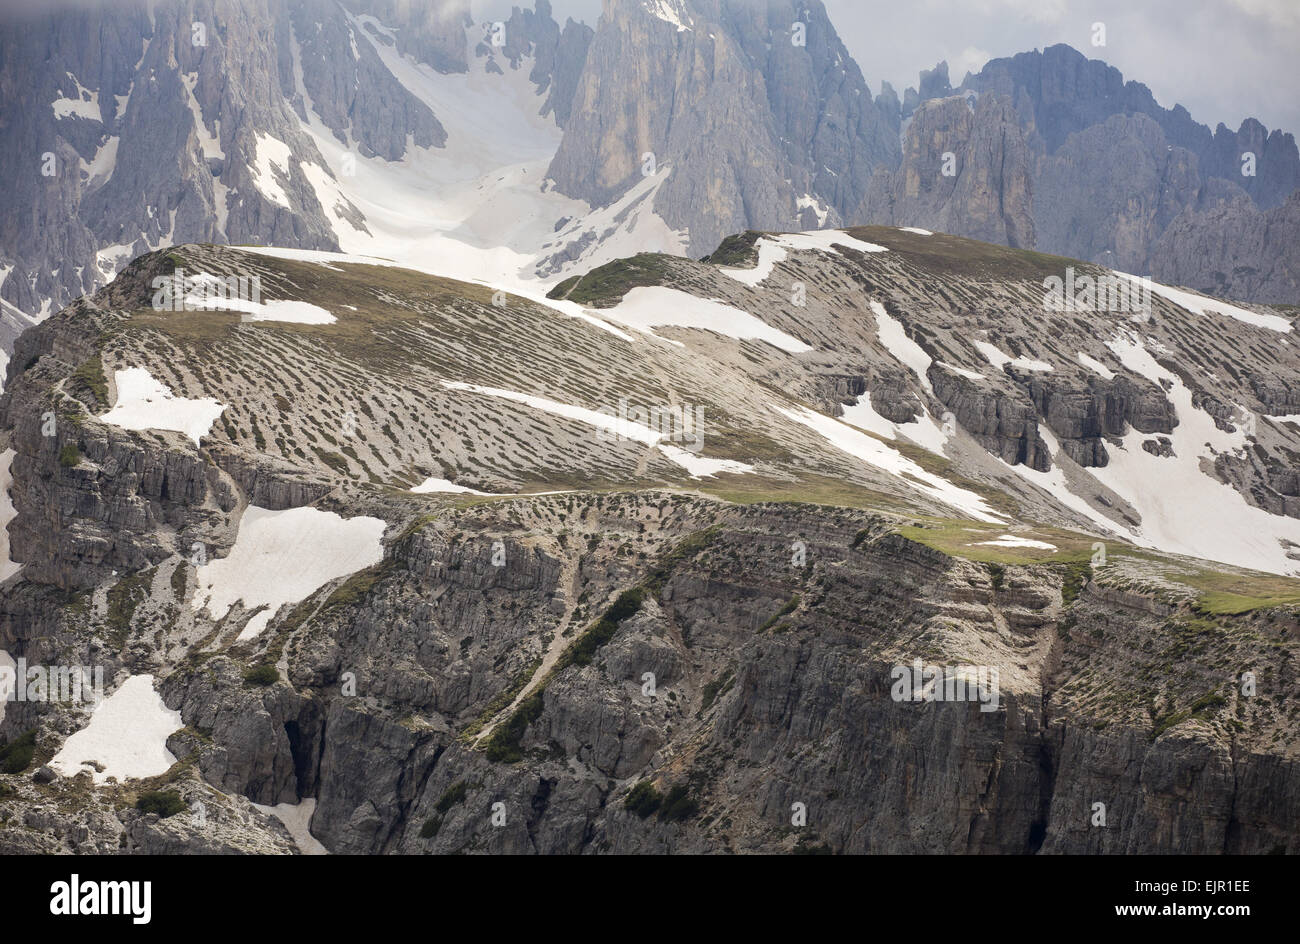 Franjas de piedra de frost jadeo en alta altitud de la tundra, Tre Cime, dolomitas, Alpes Italianos, Italia, junio Foto de stock